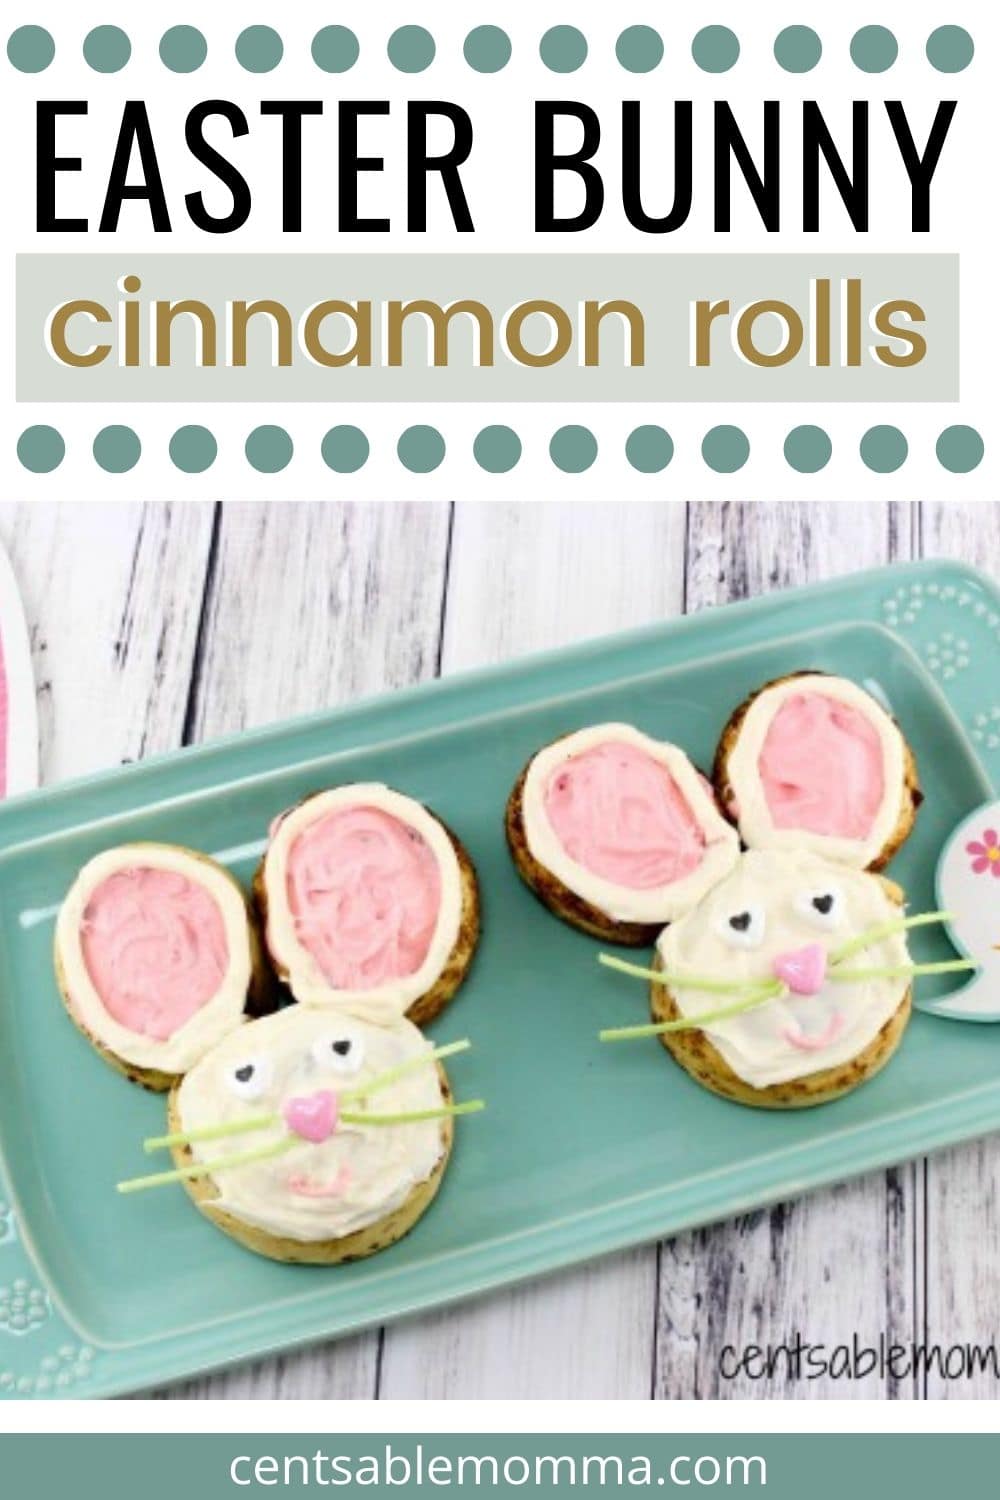 Easter Bunny Cinnamon Rolls Recipe - Centsable Momma